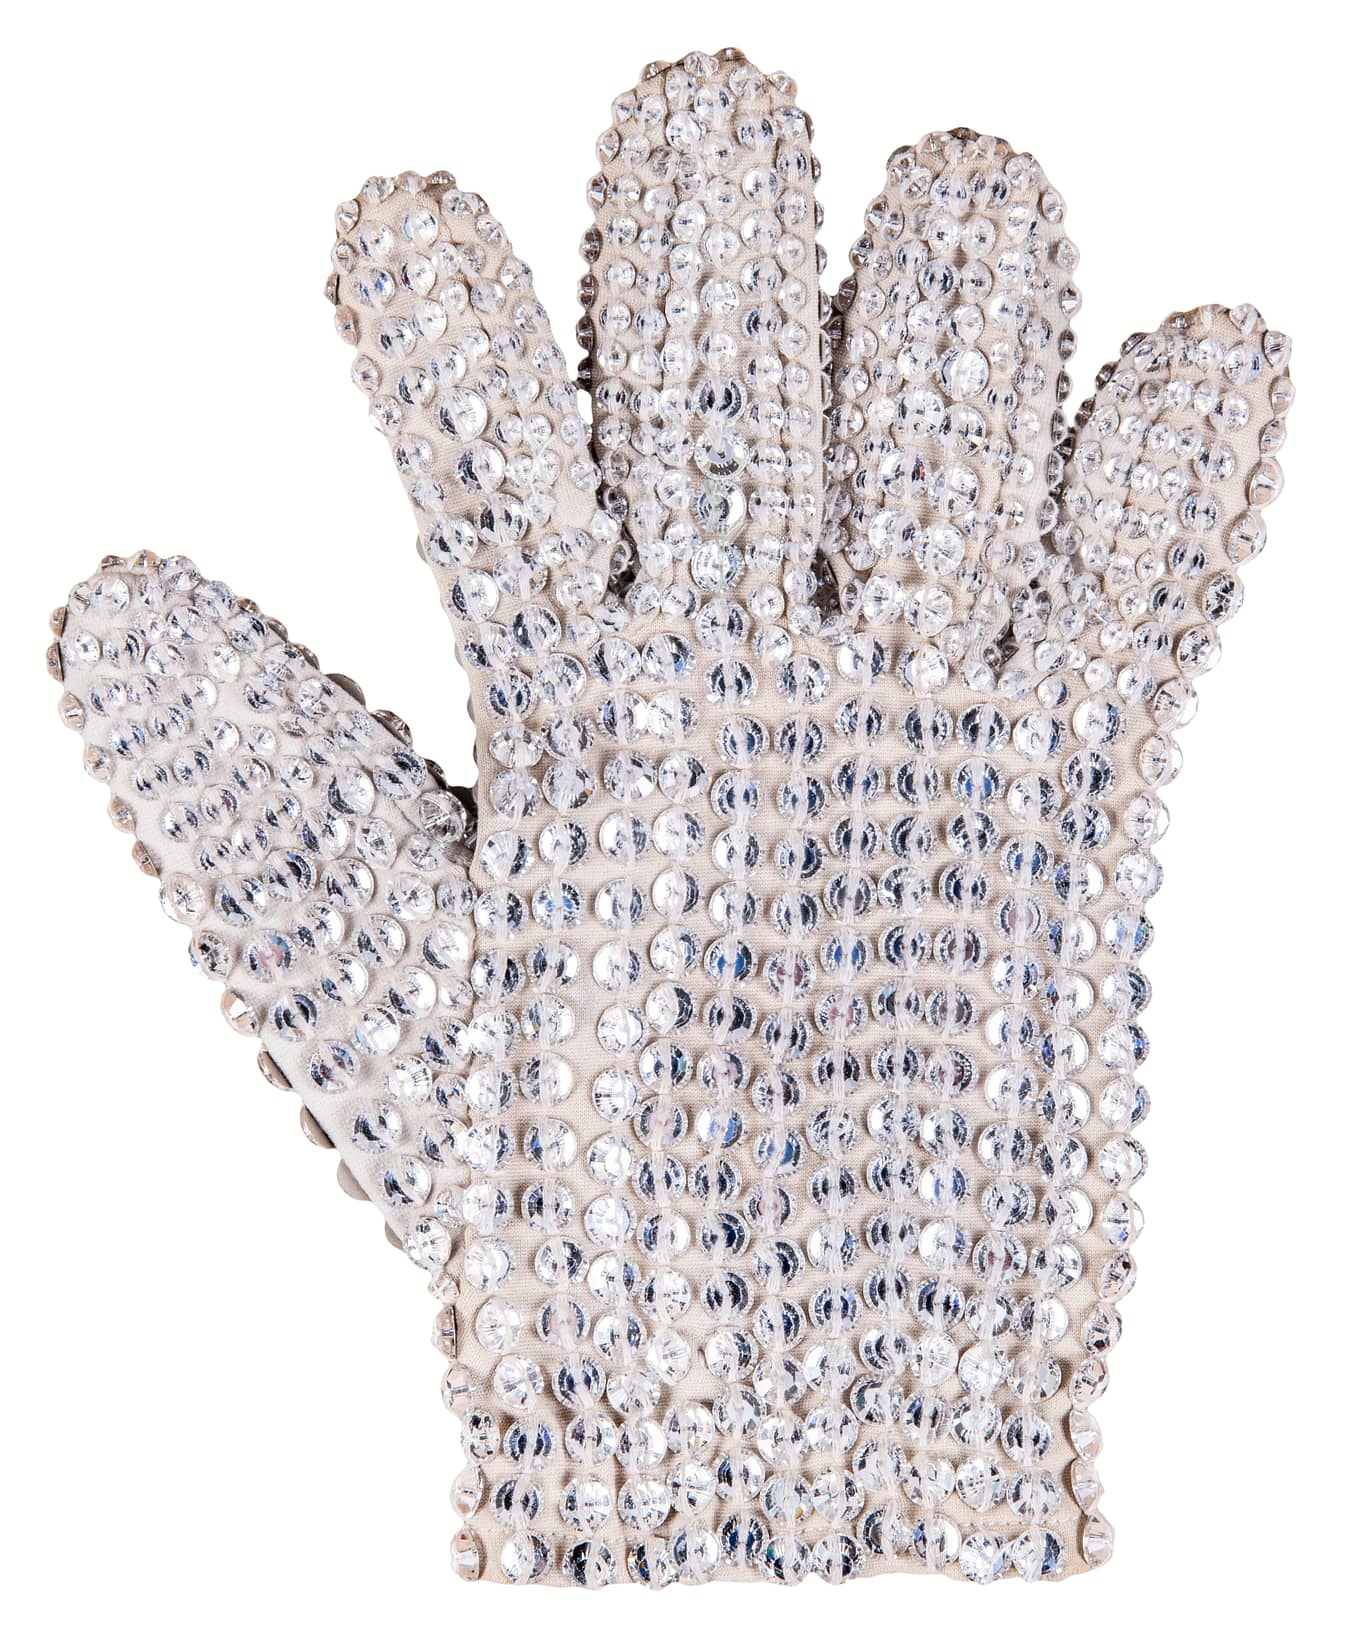 Michael Jackson Swarovski Crystals Glove (100% Exact Replica) - $499.99